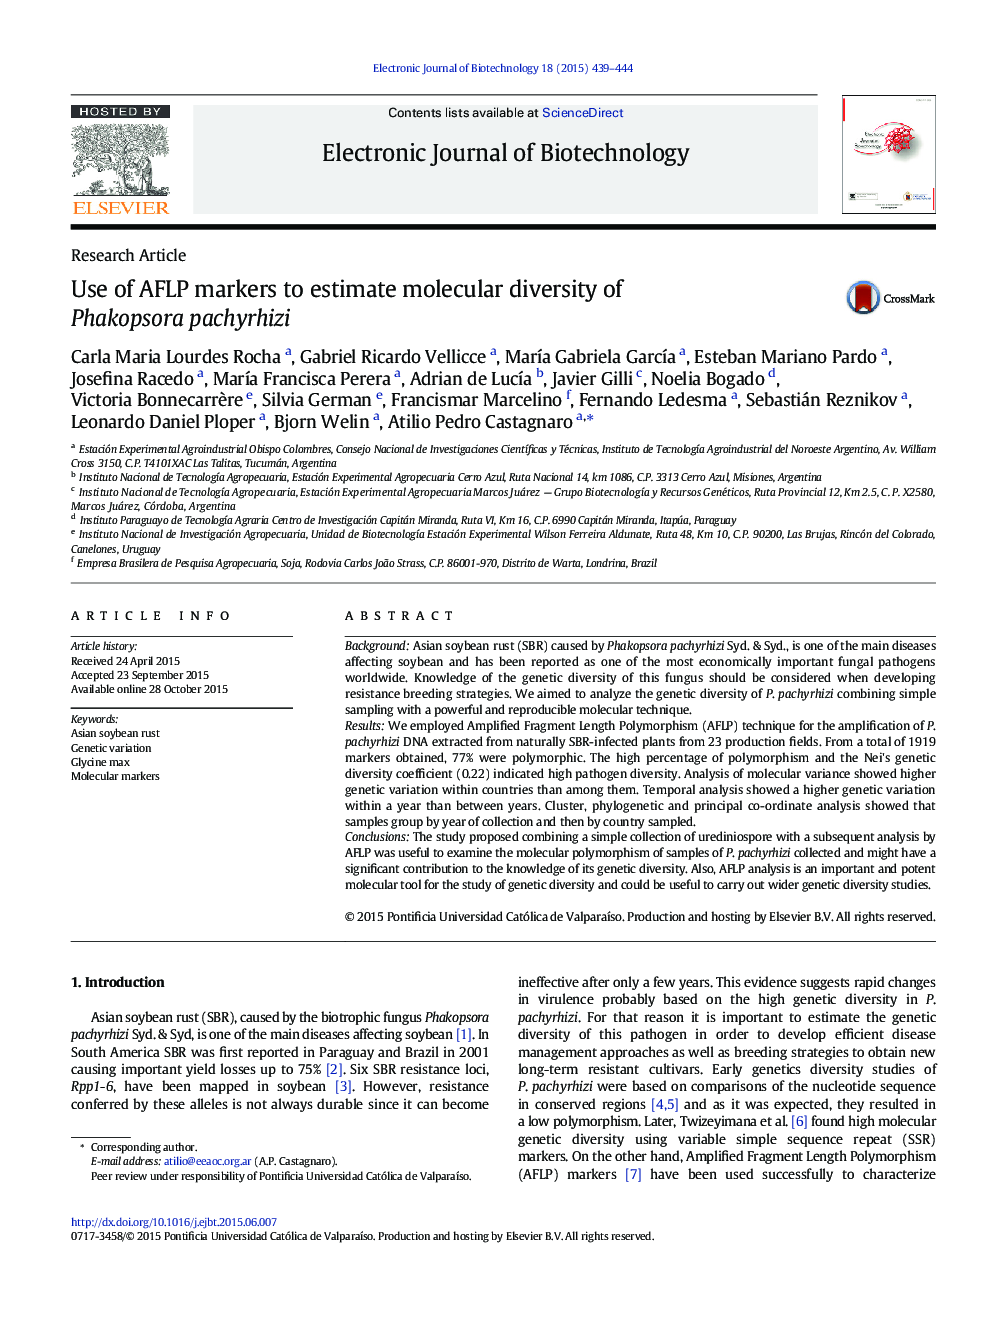 Use of AFLP markers to estimate molecular diversity of Phakopsora pachyrhizi 